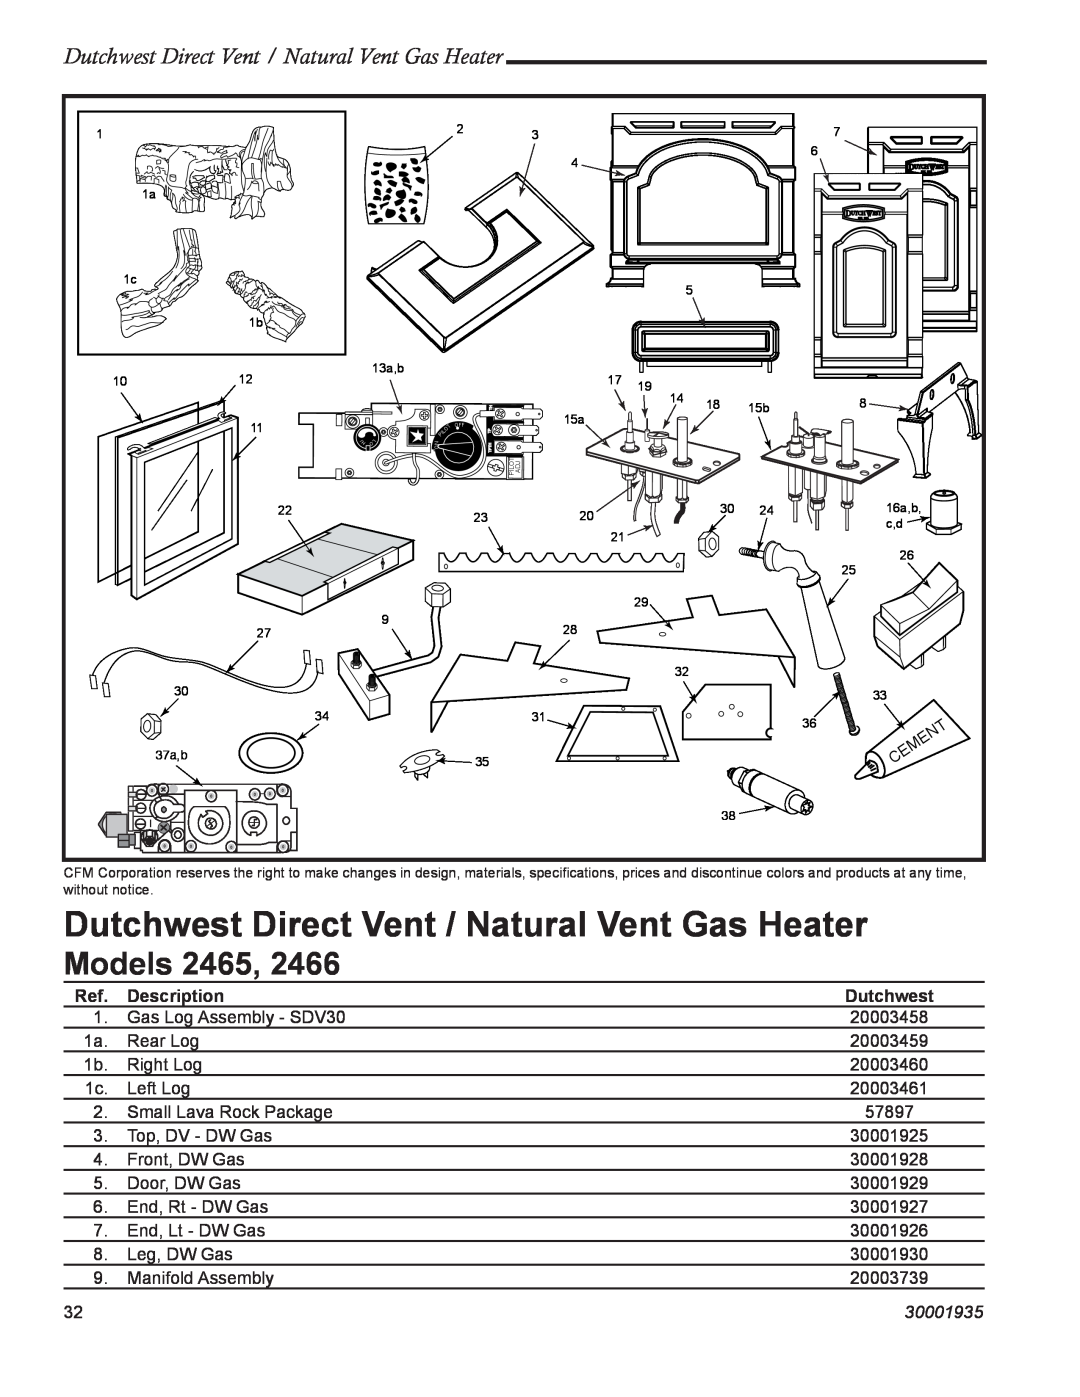 Vermont Casting 2466, 2465 manual Models, Dutchwest Direct Vent / Natural Vent Gas Heater, 30001935 